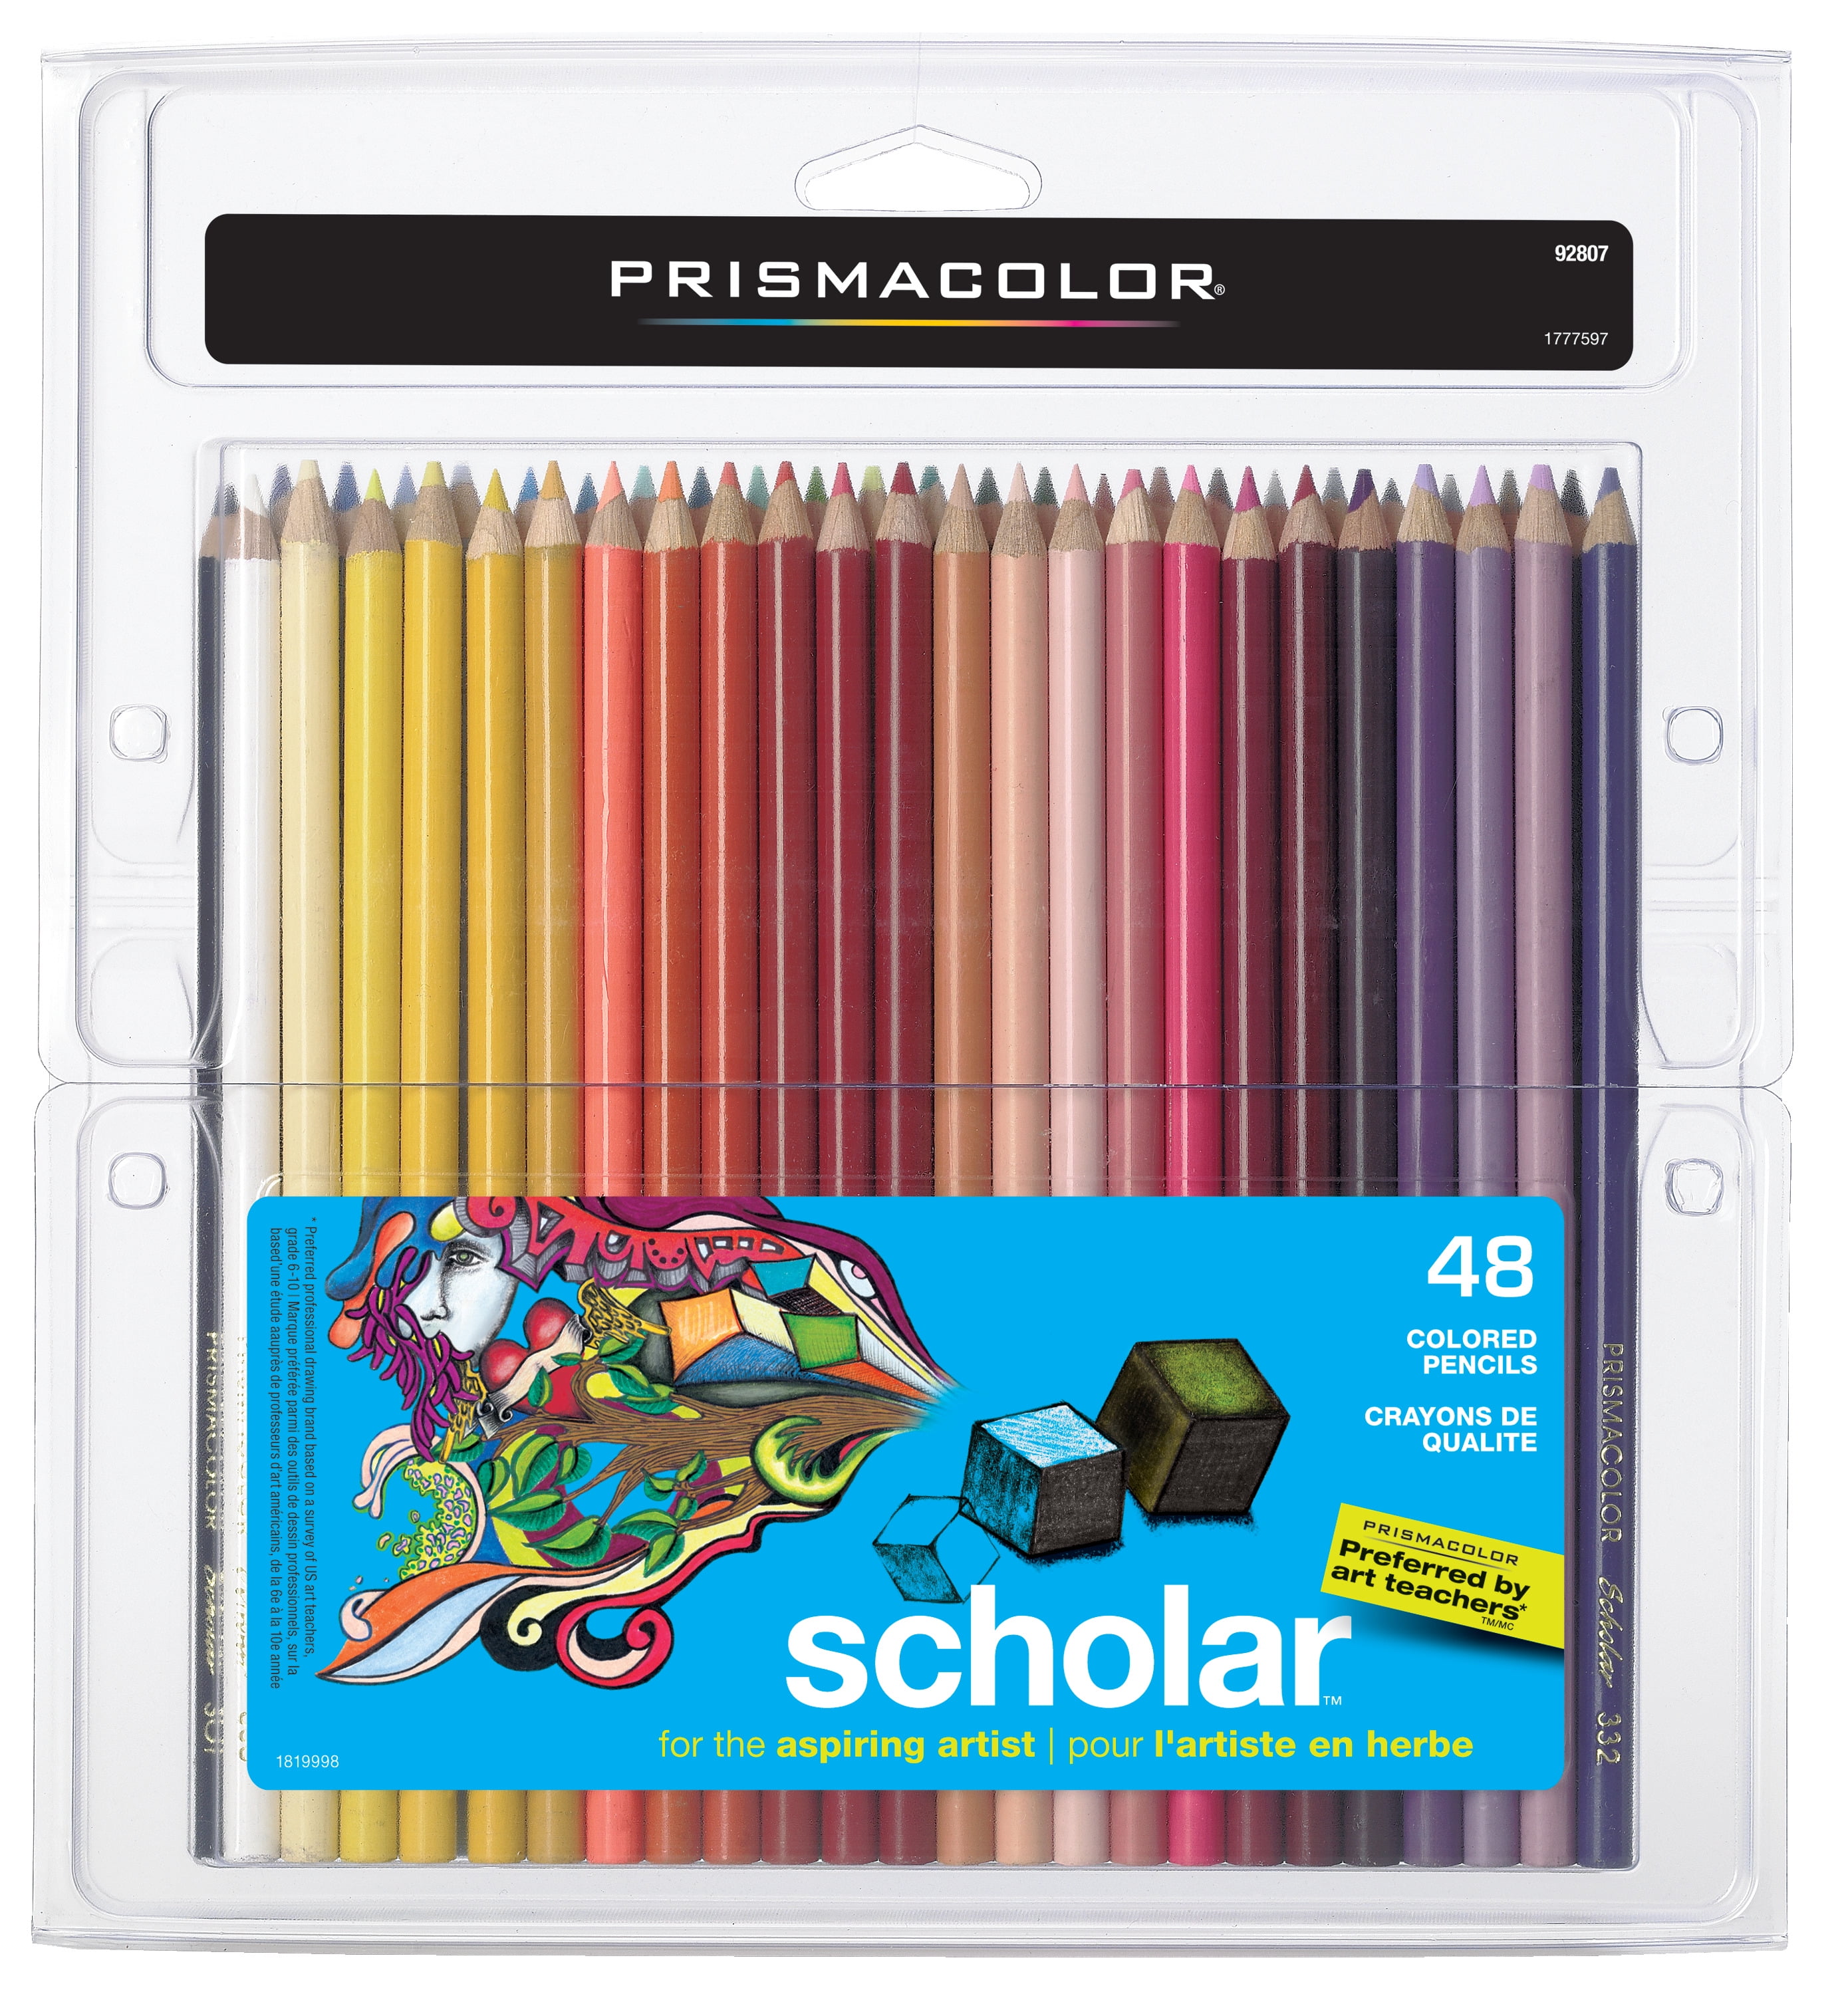 180 Pieces Coloring Pencils Set Water Color Pencils Professional